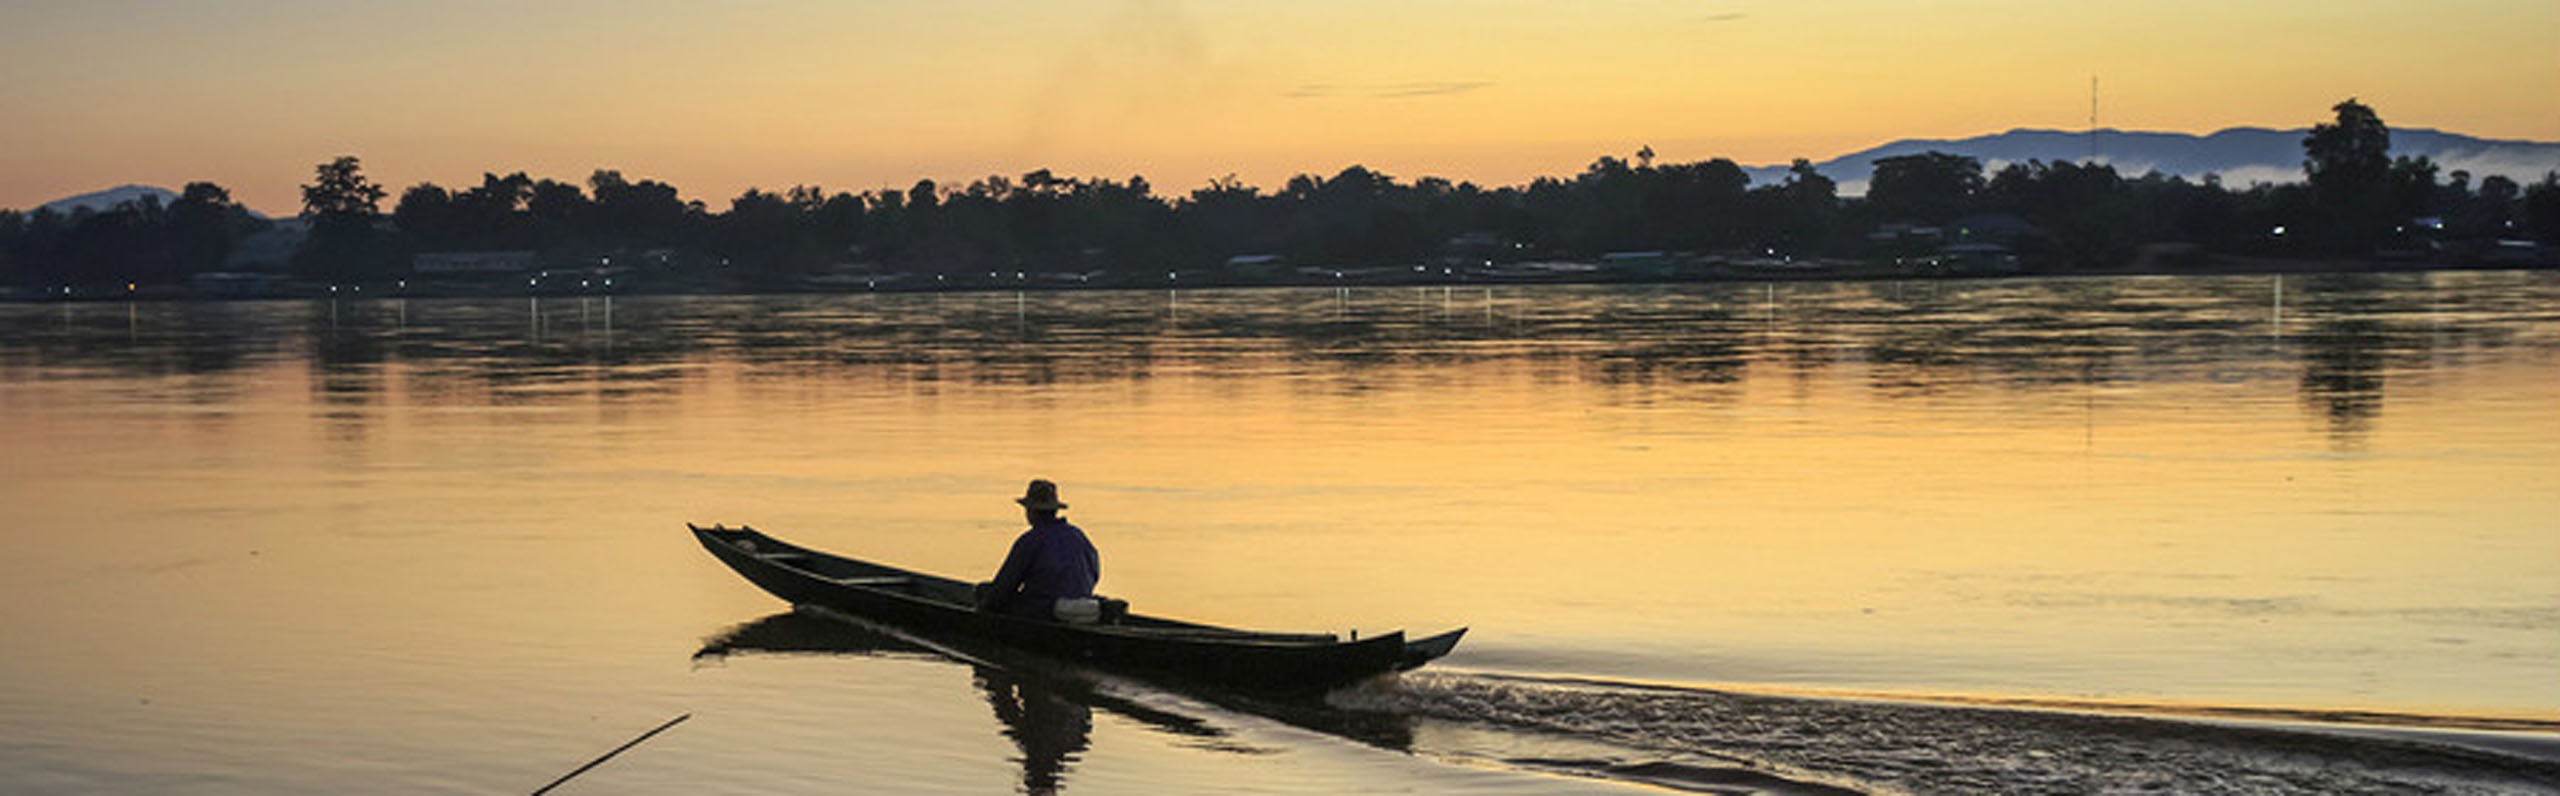 Best Time to Visit Mekong Delta in Vietnam 